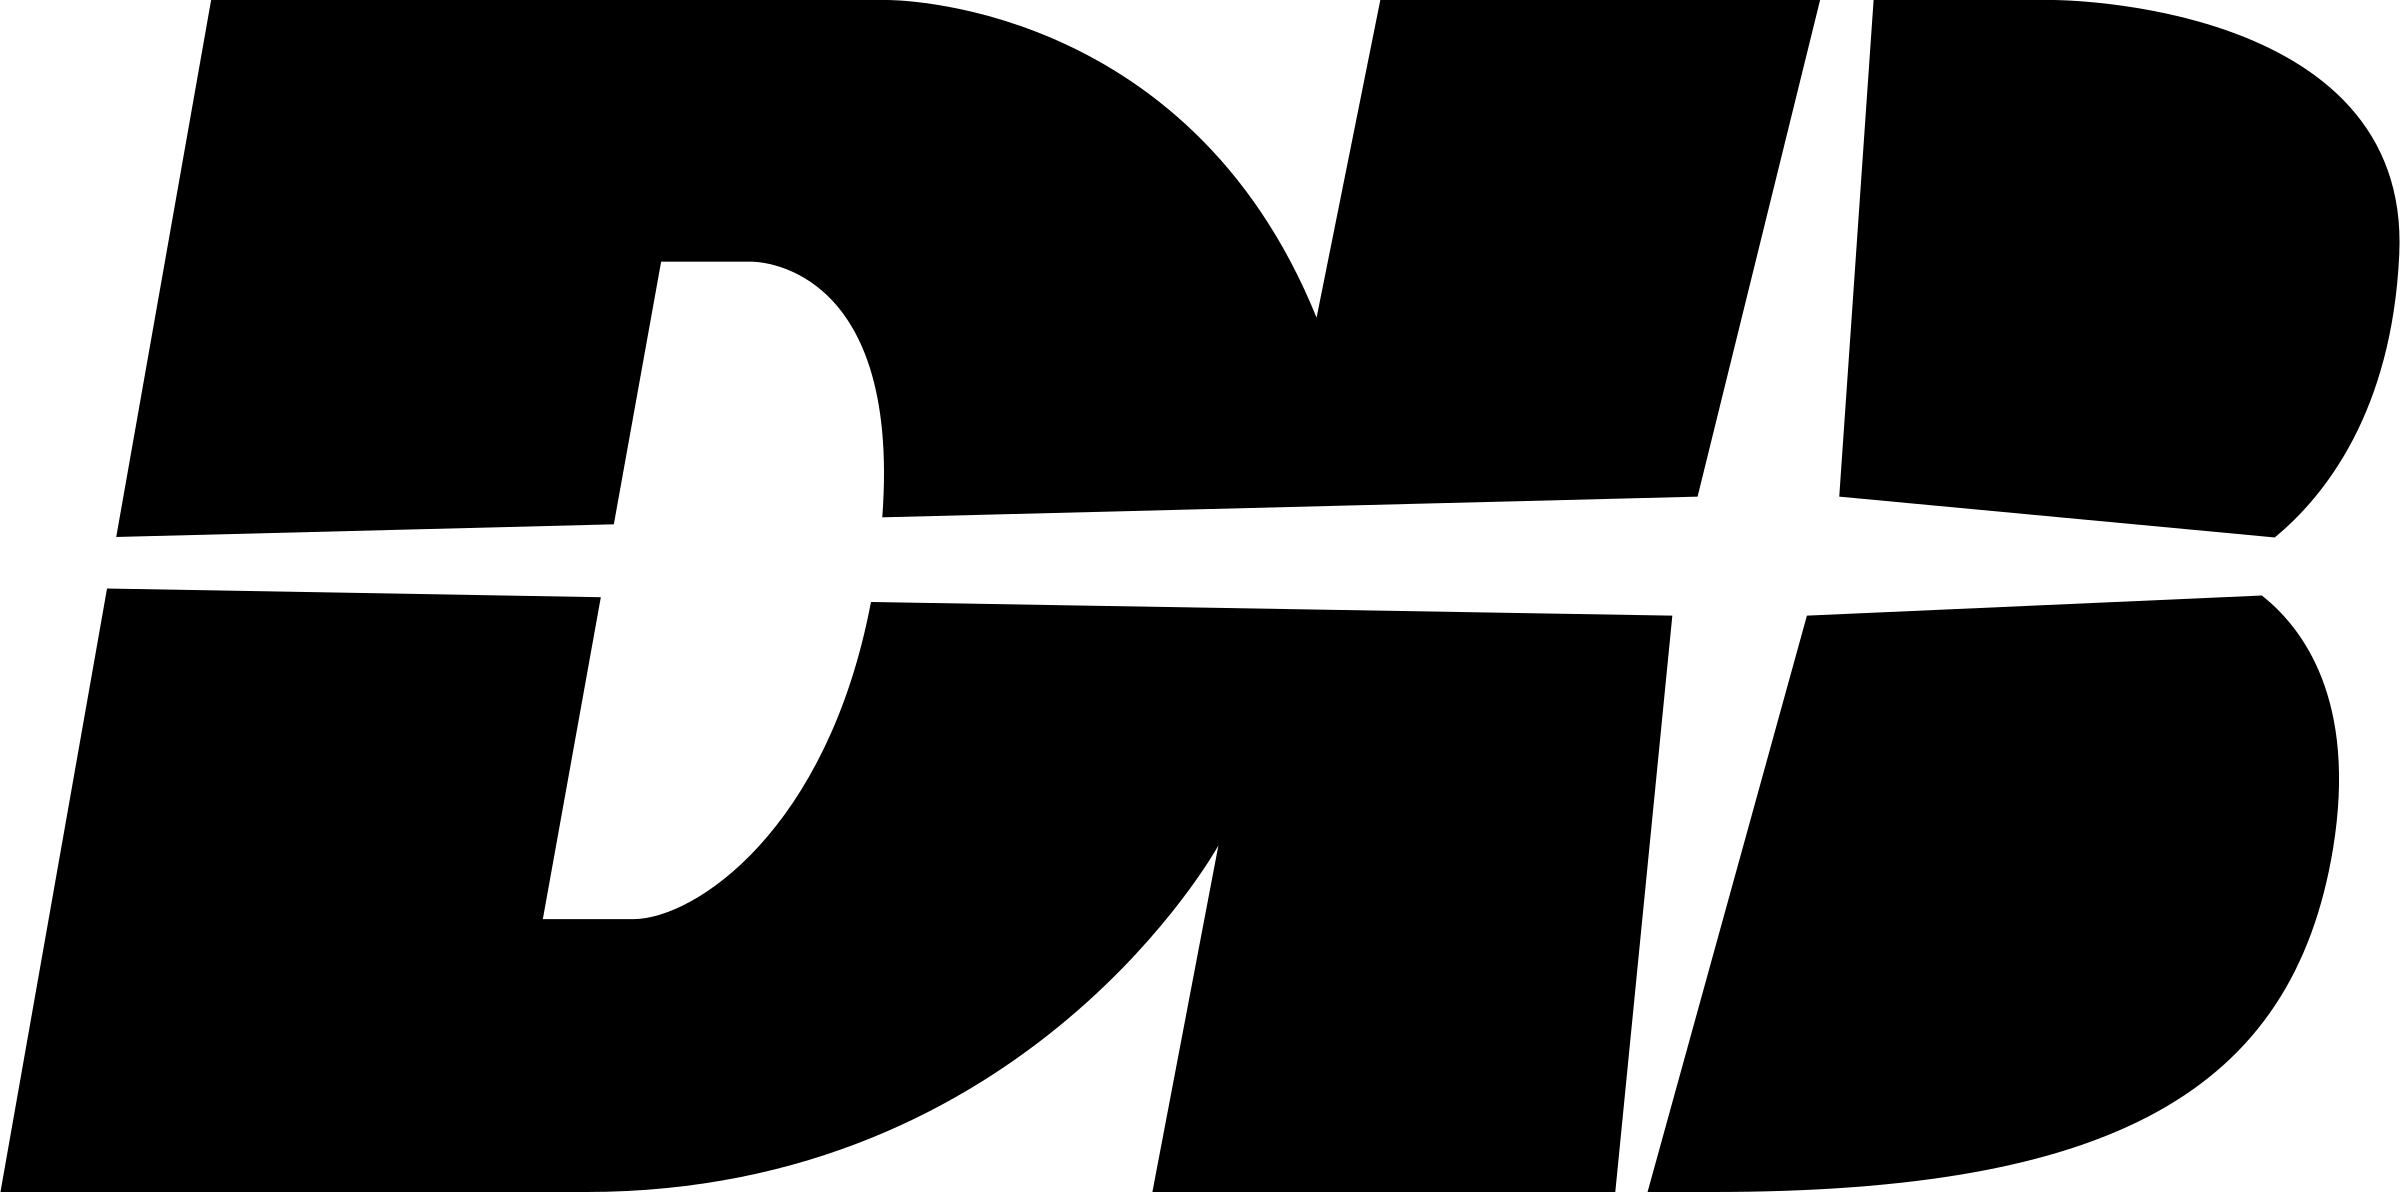 DB Logo - DB Logo PNG Transparent & SVG Vector - Freebie Supply